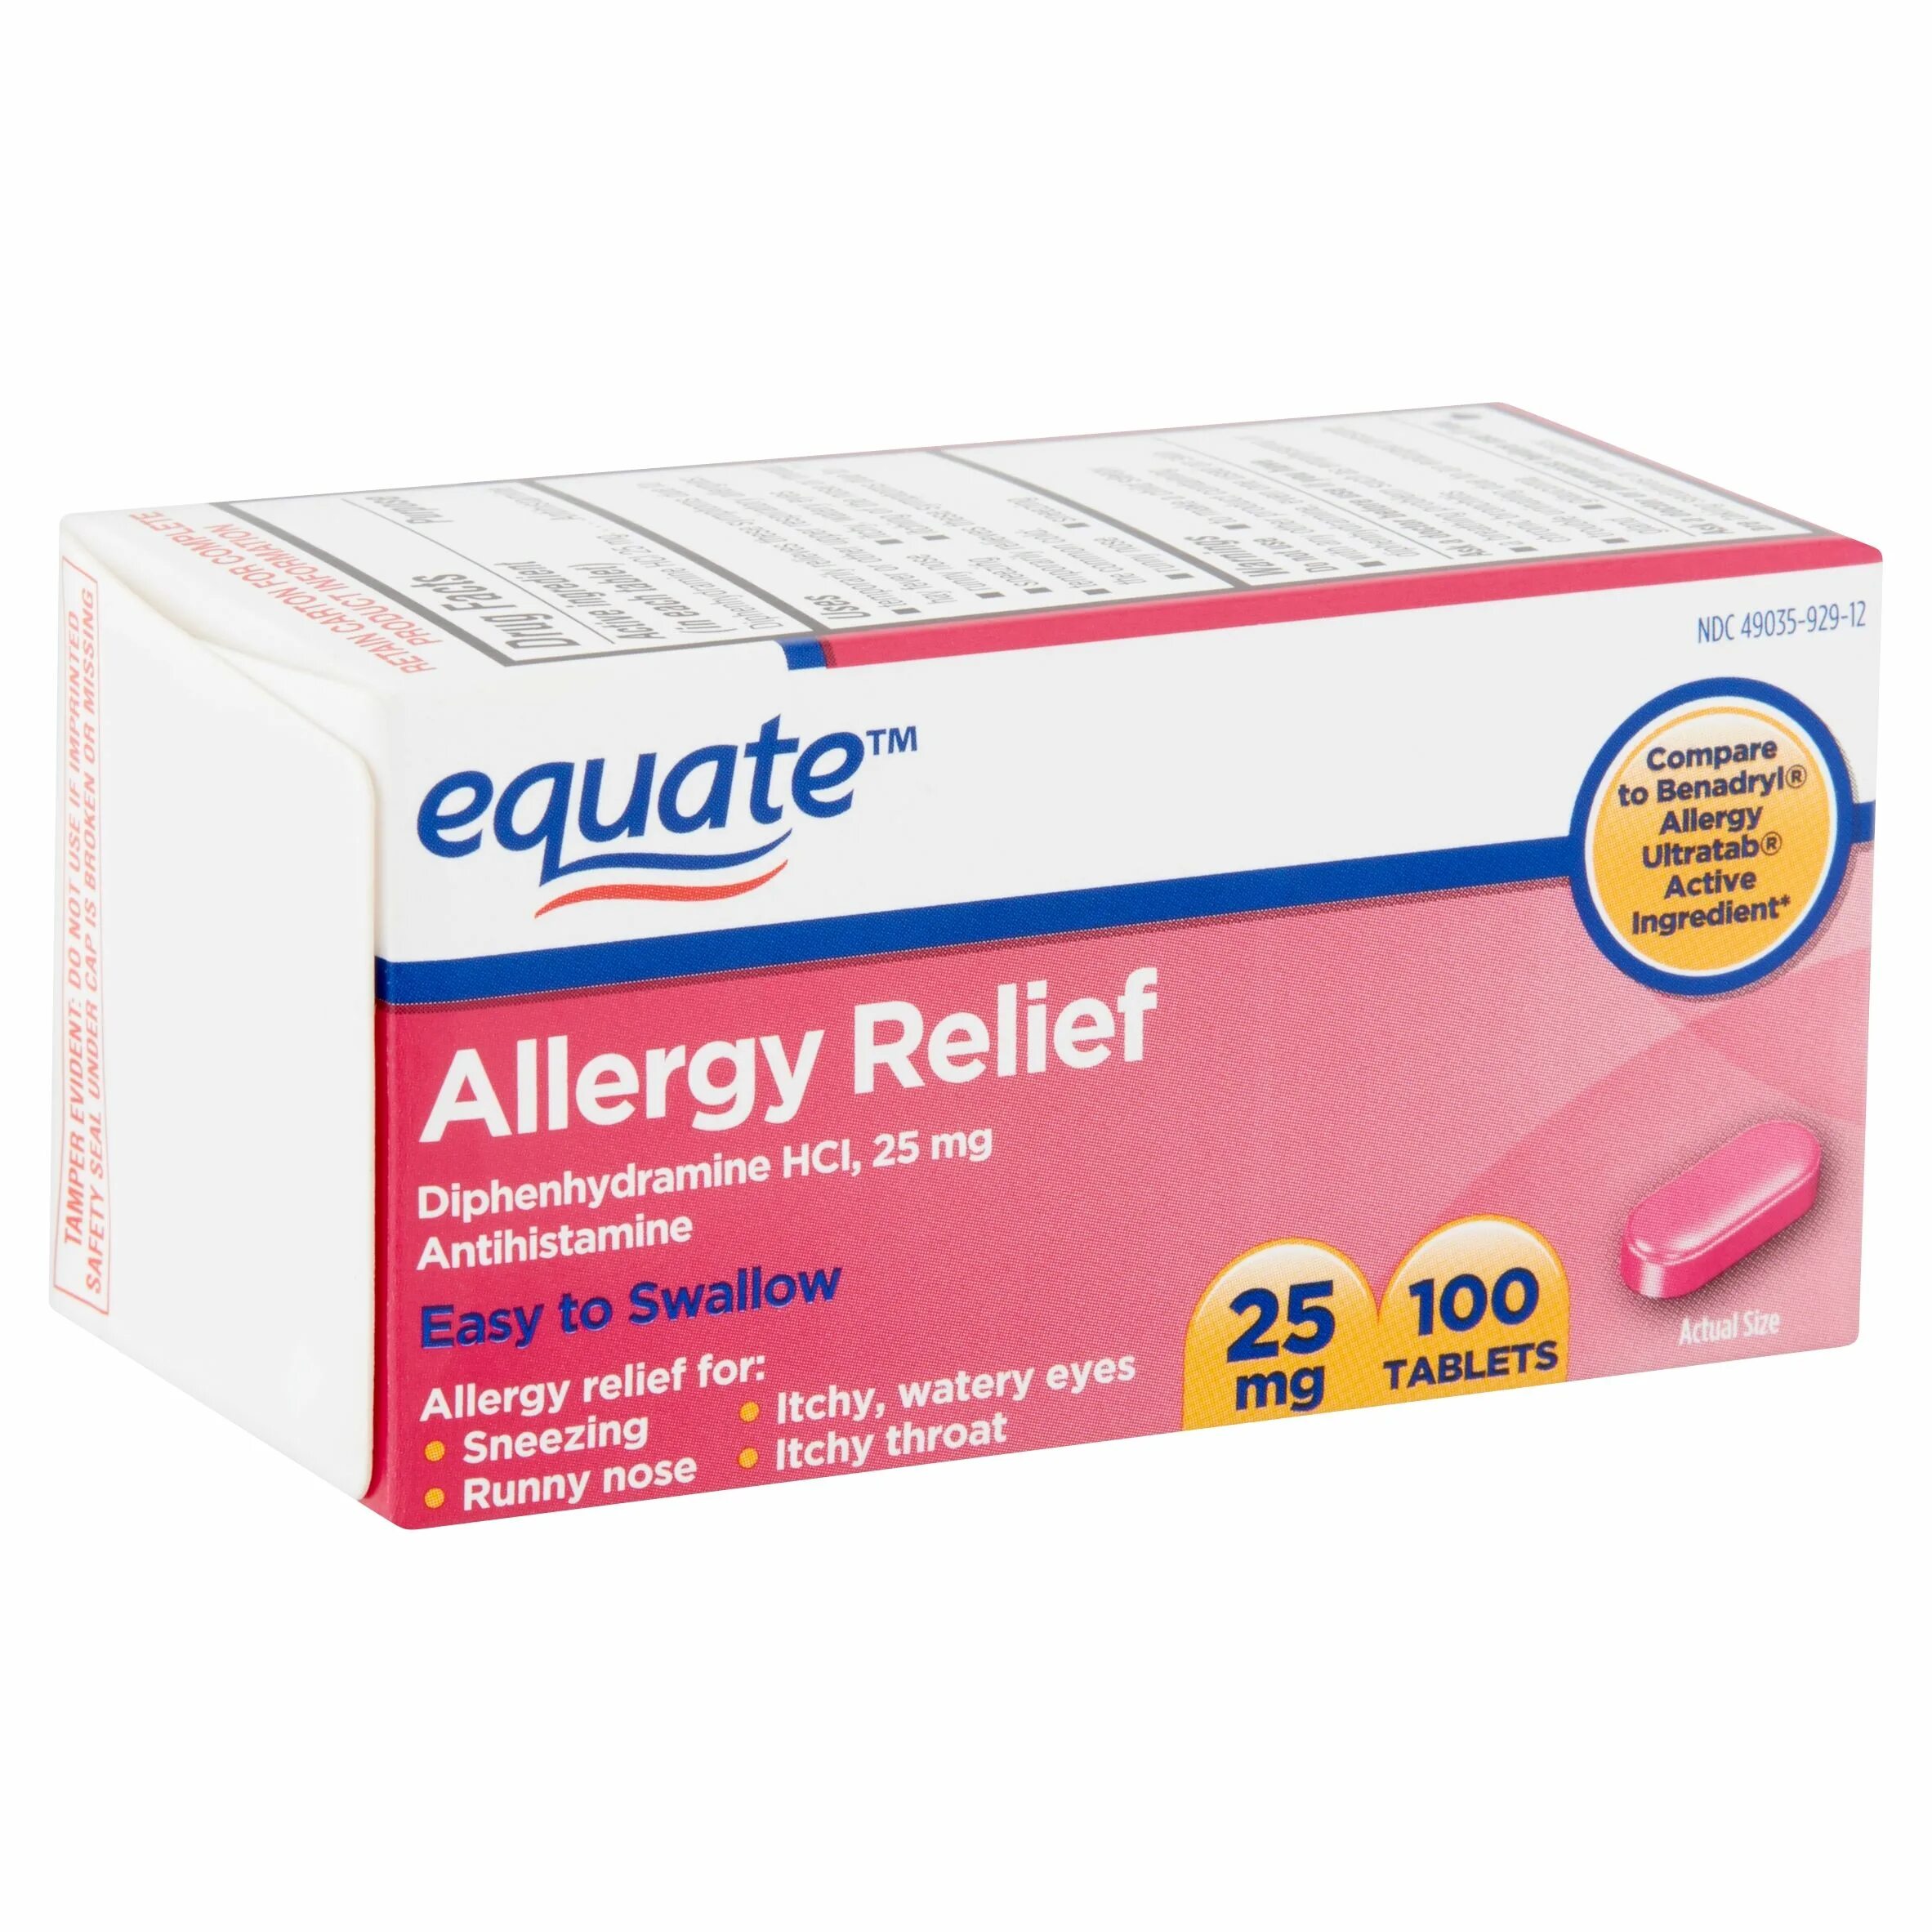 Allergy купить. Equate Allergy Relief. Walmart Allergy Relief equate. Аллержи табс. Allergy таблетки.